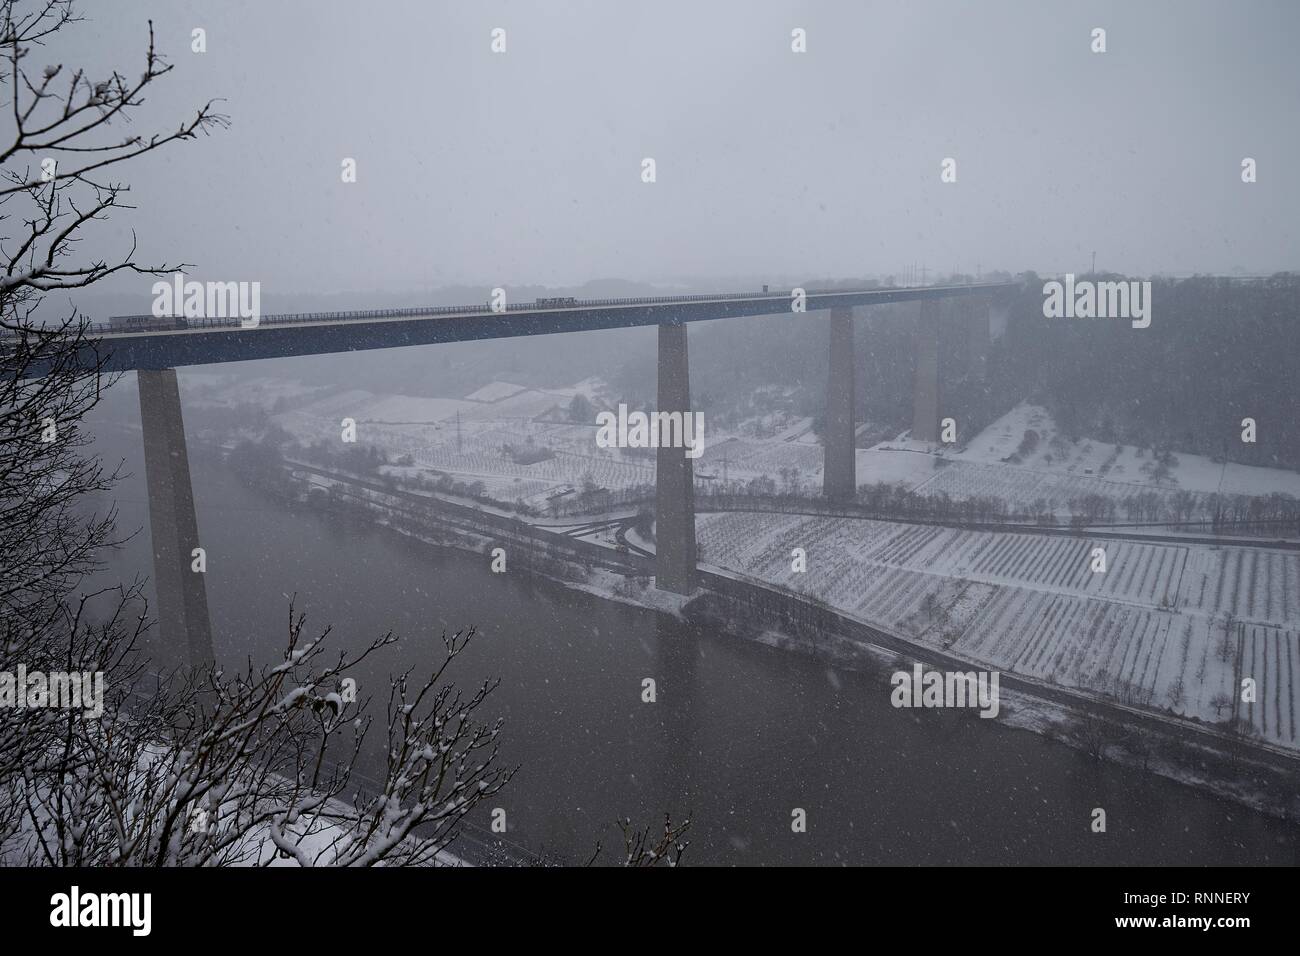 The motorway bridge of the A61 in Winningen, Schneefall, Winningen, Rhineland-Palatinate, Germany Stock Photo